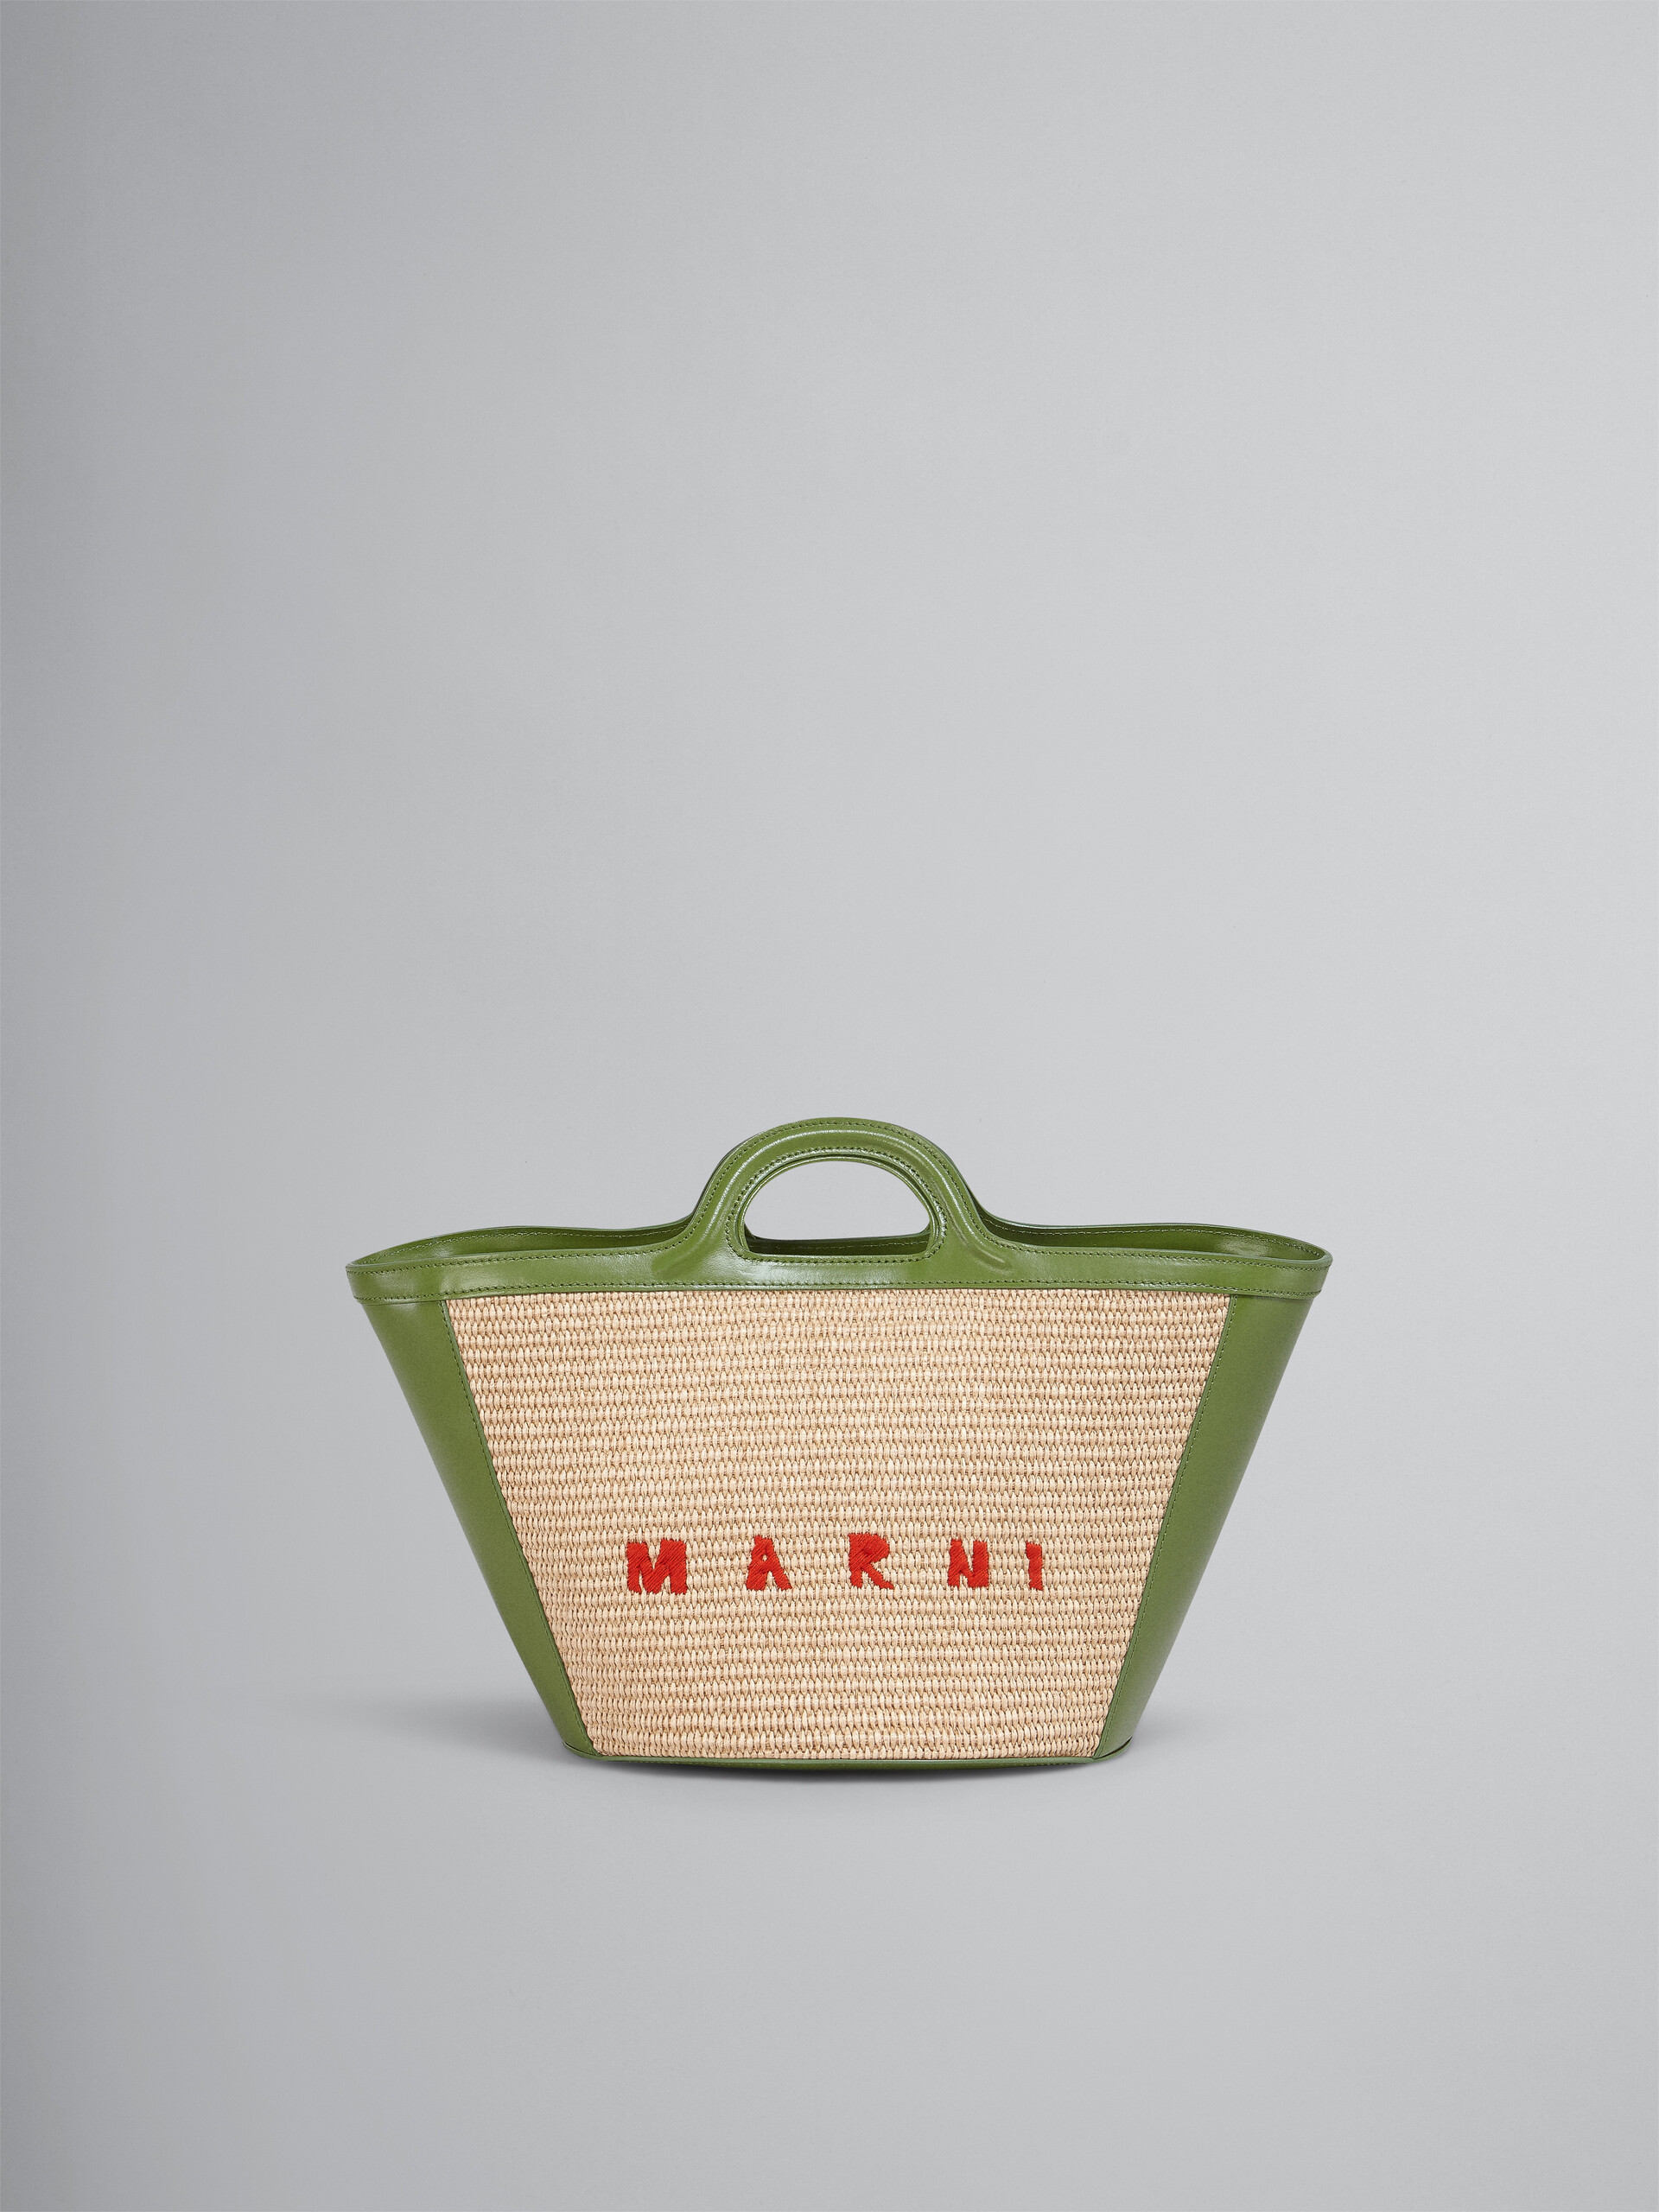 TROPICALIA small bag in green leather and raffia - Handbags - Image 1